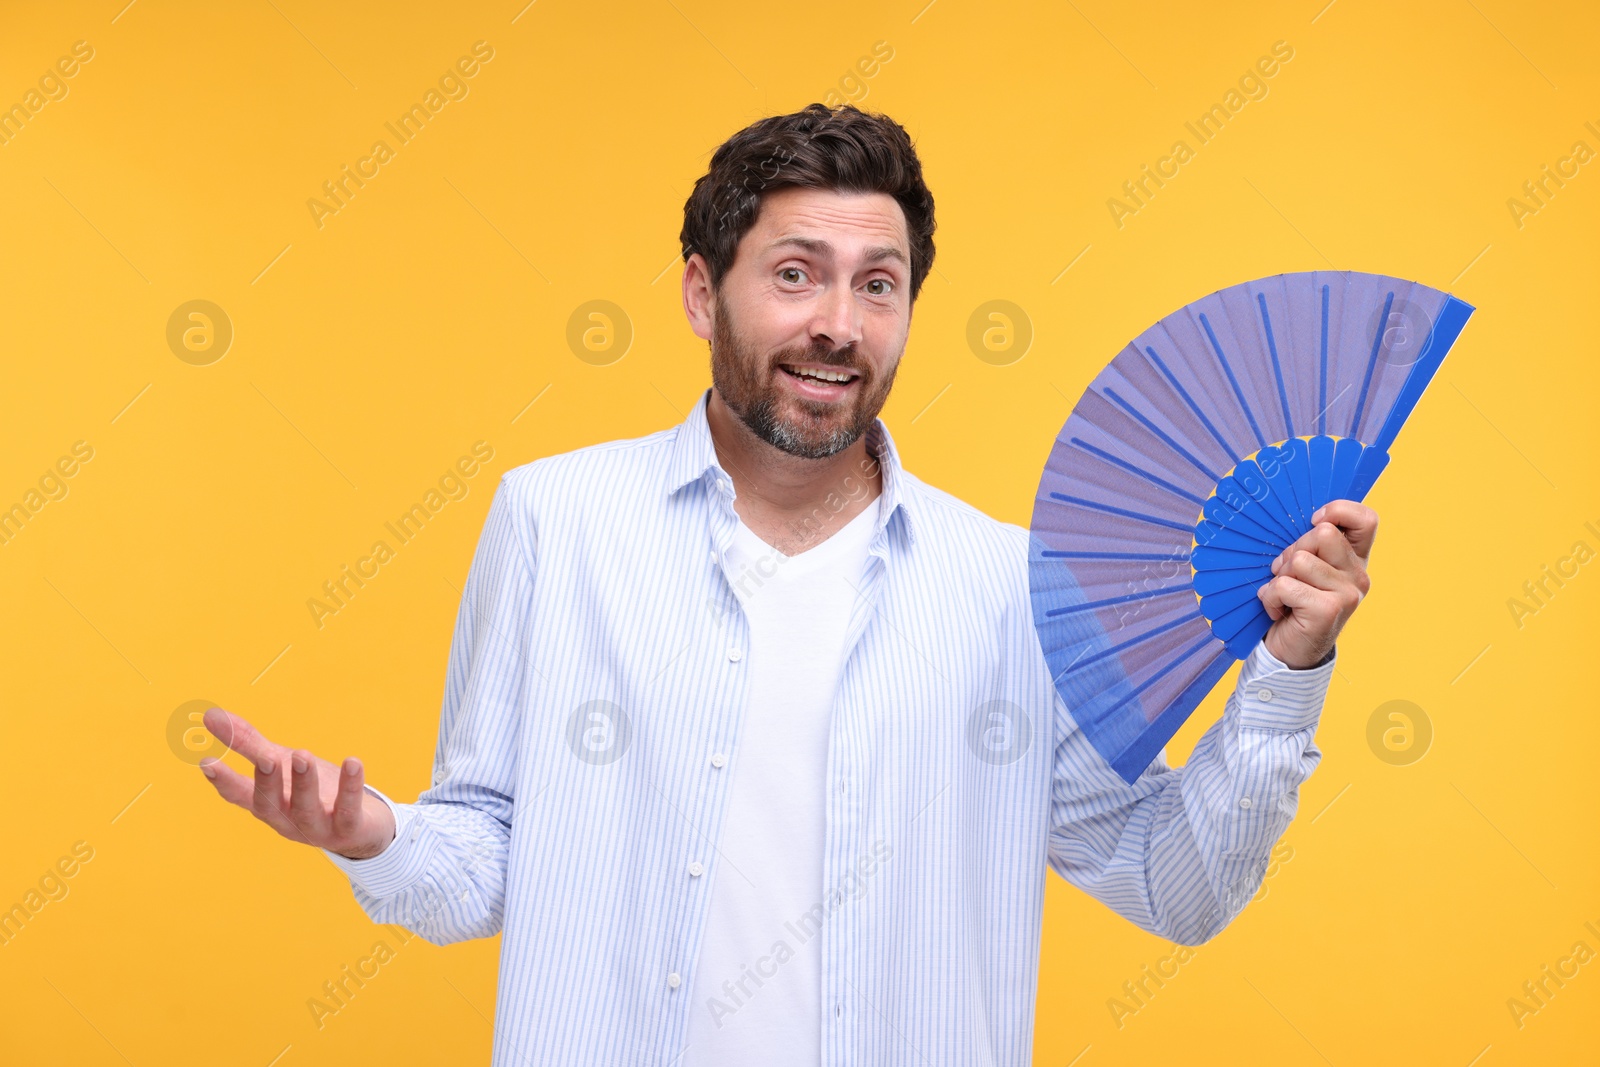 Photo of Confused man holding hand fan on orange background